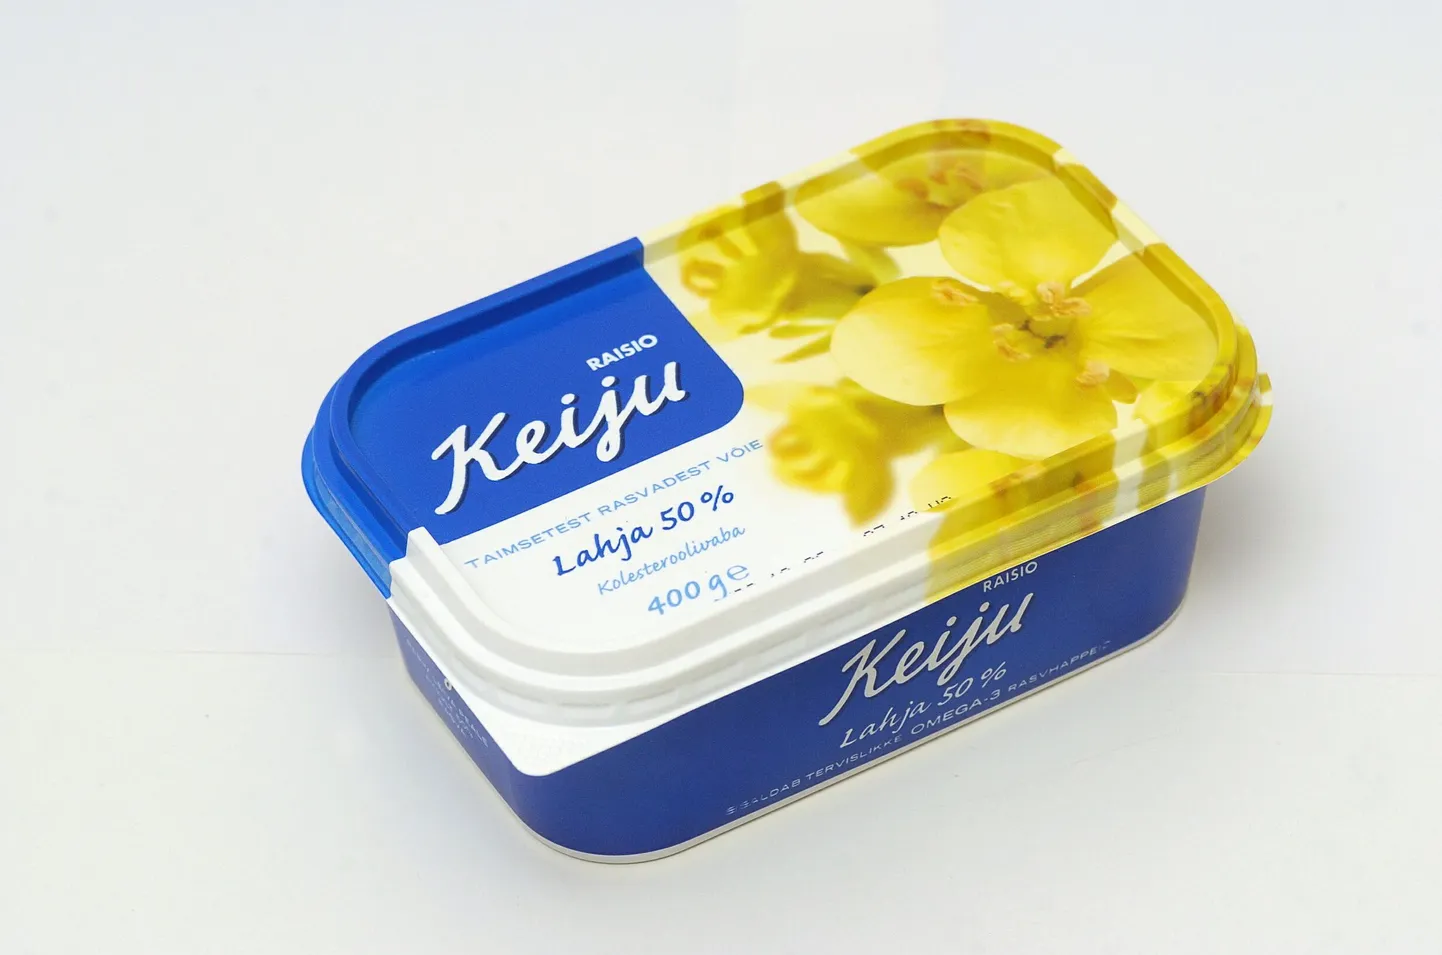 Keiju margariin